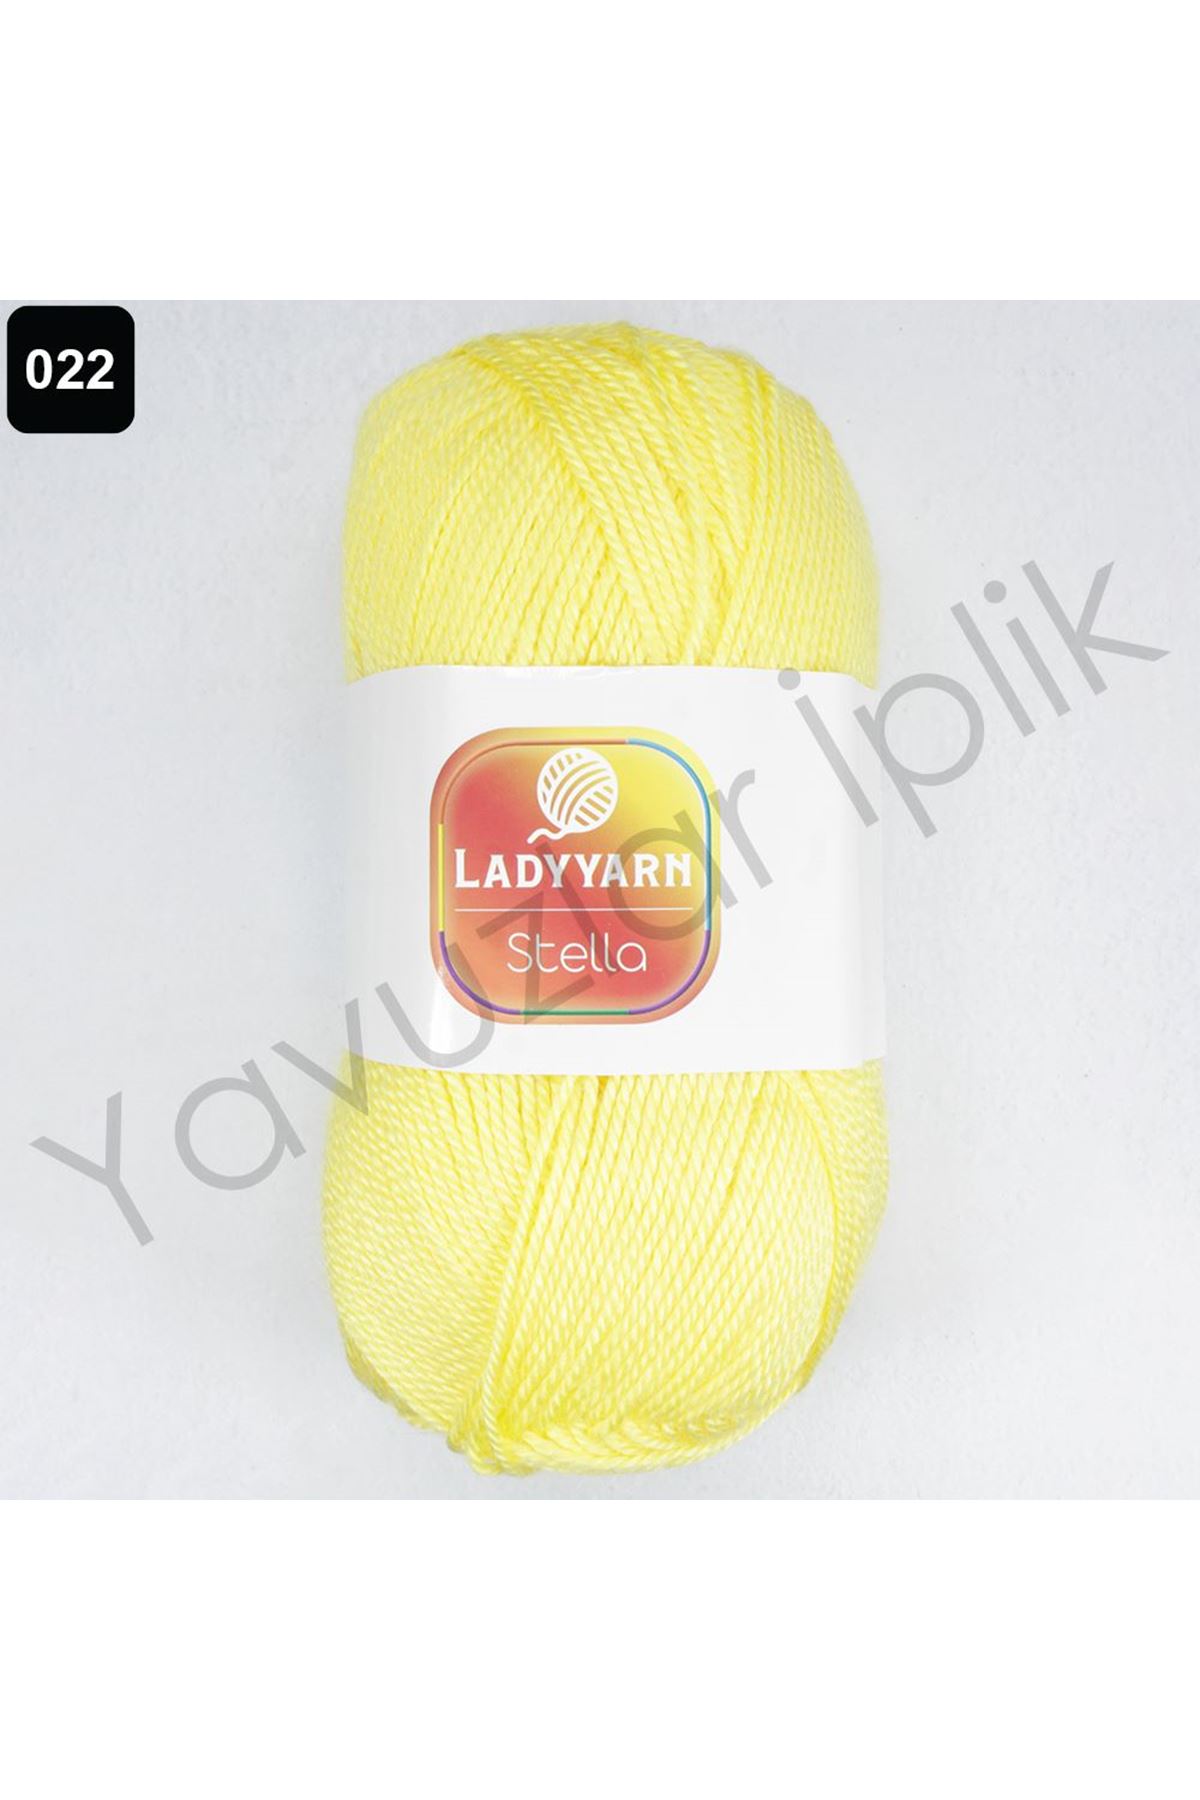 Lady Yarn Stella Renk No: 022